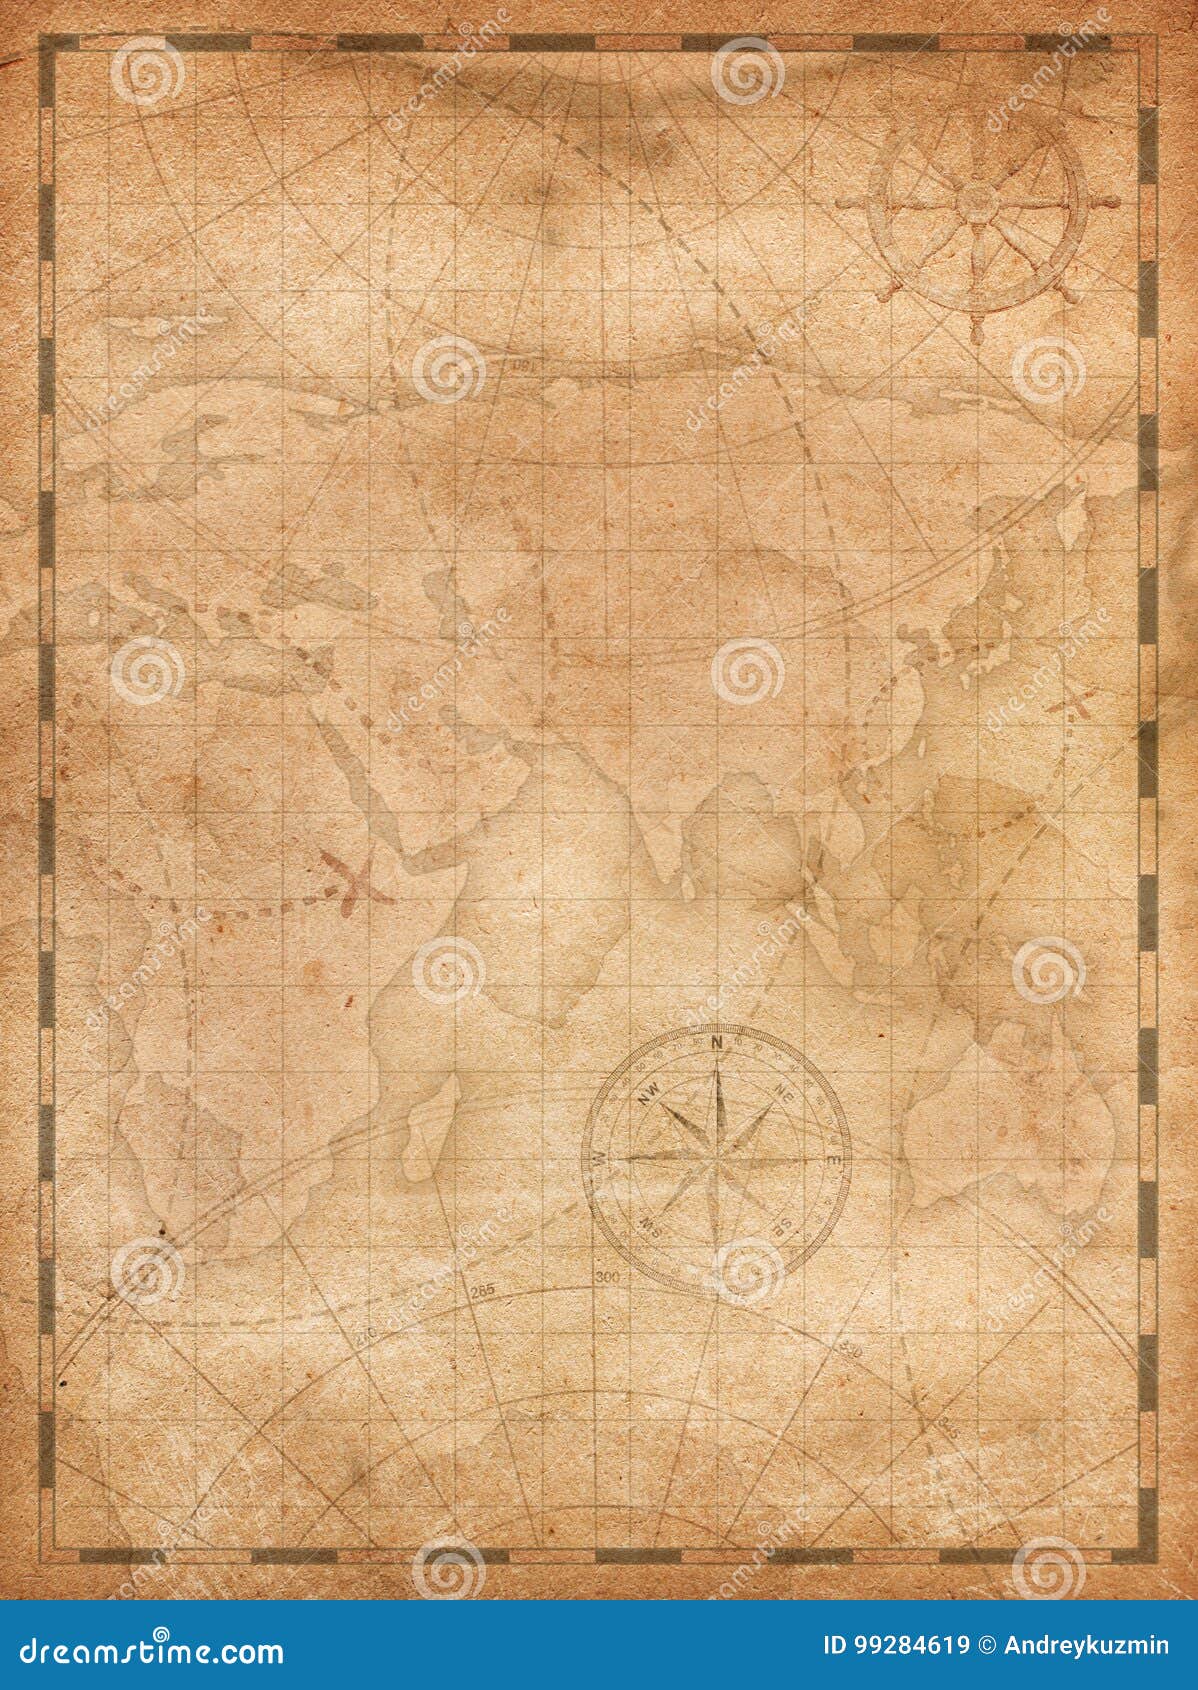 Fundo do vintage do mapa do tesouro do pirata